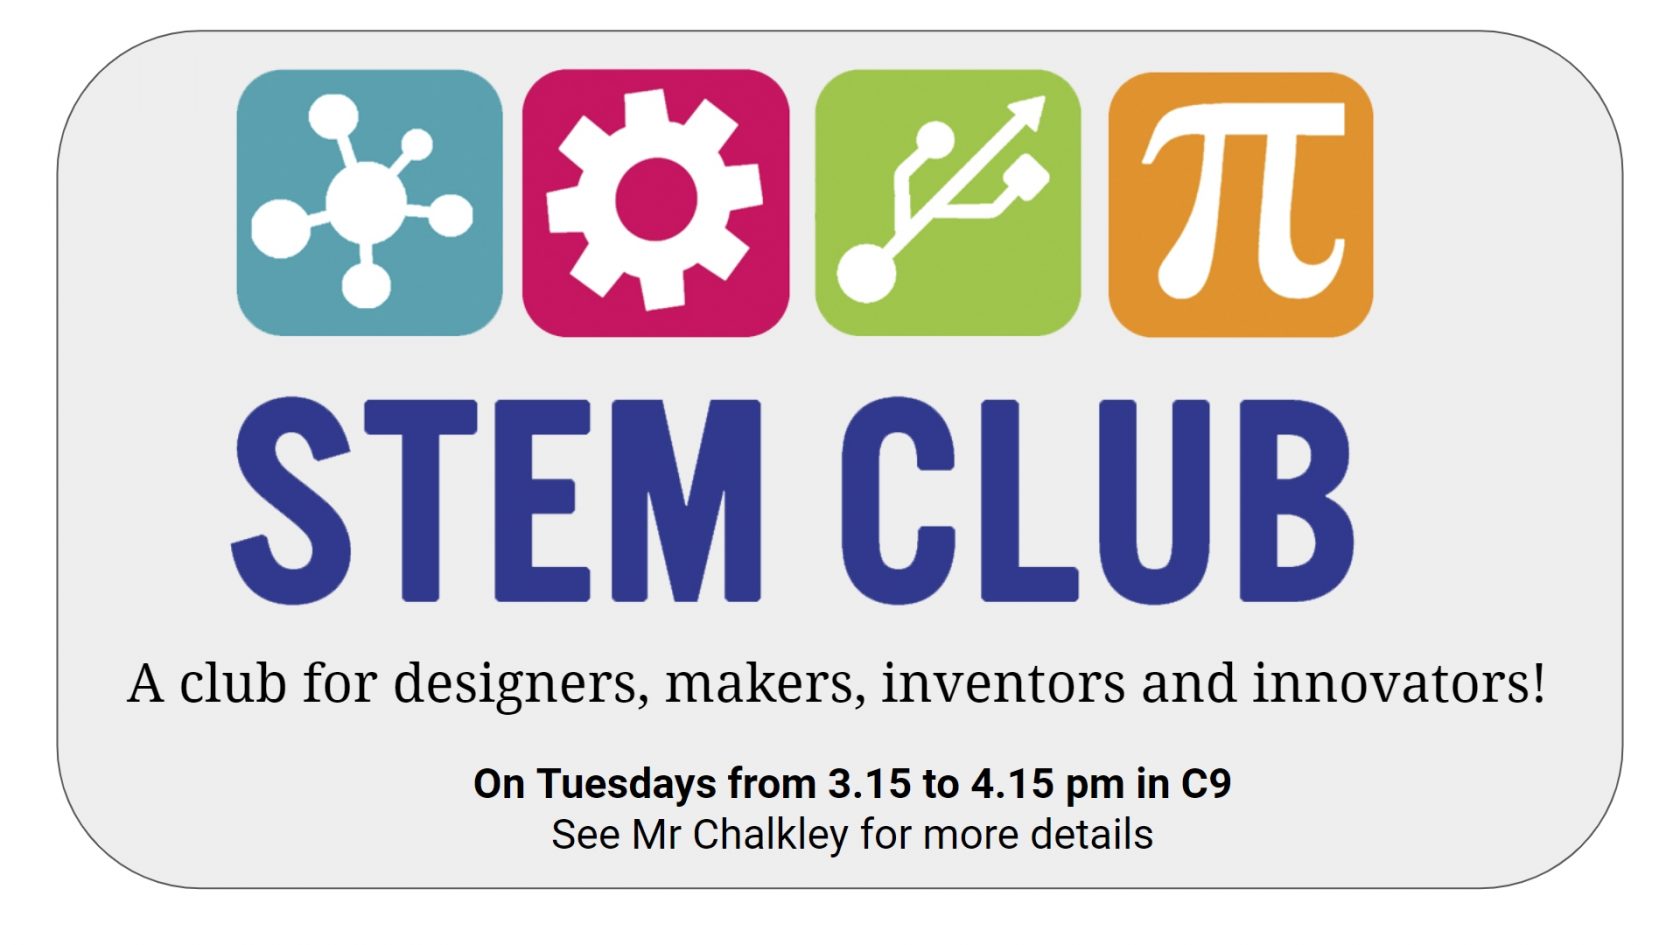 STEM Club News